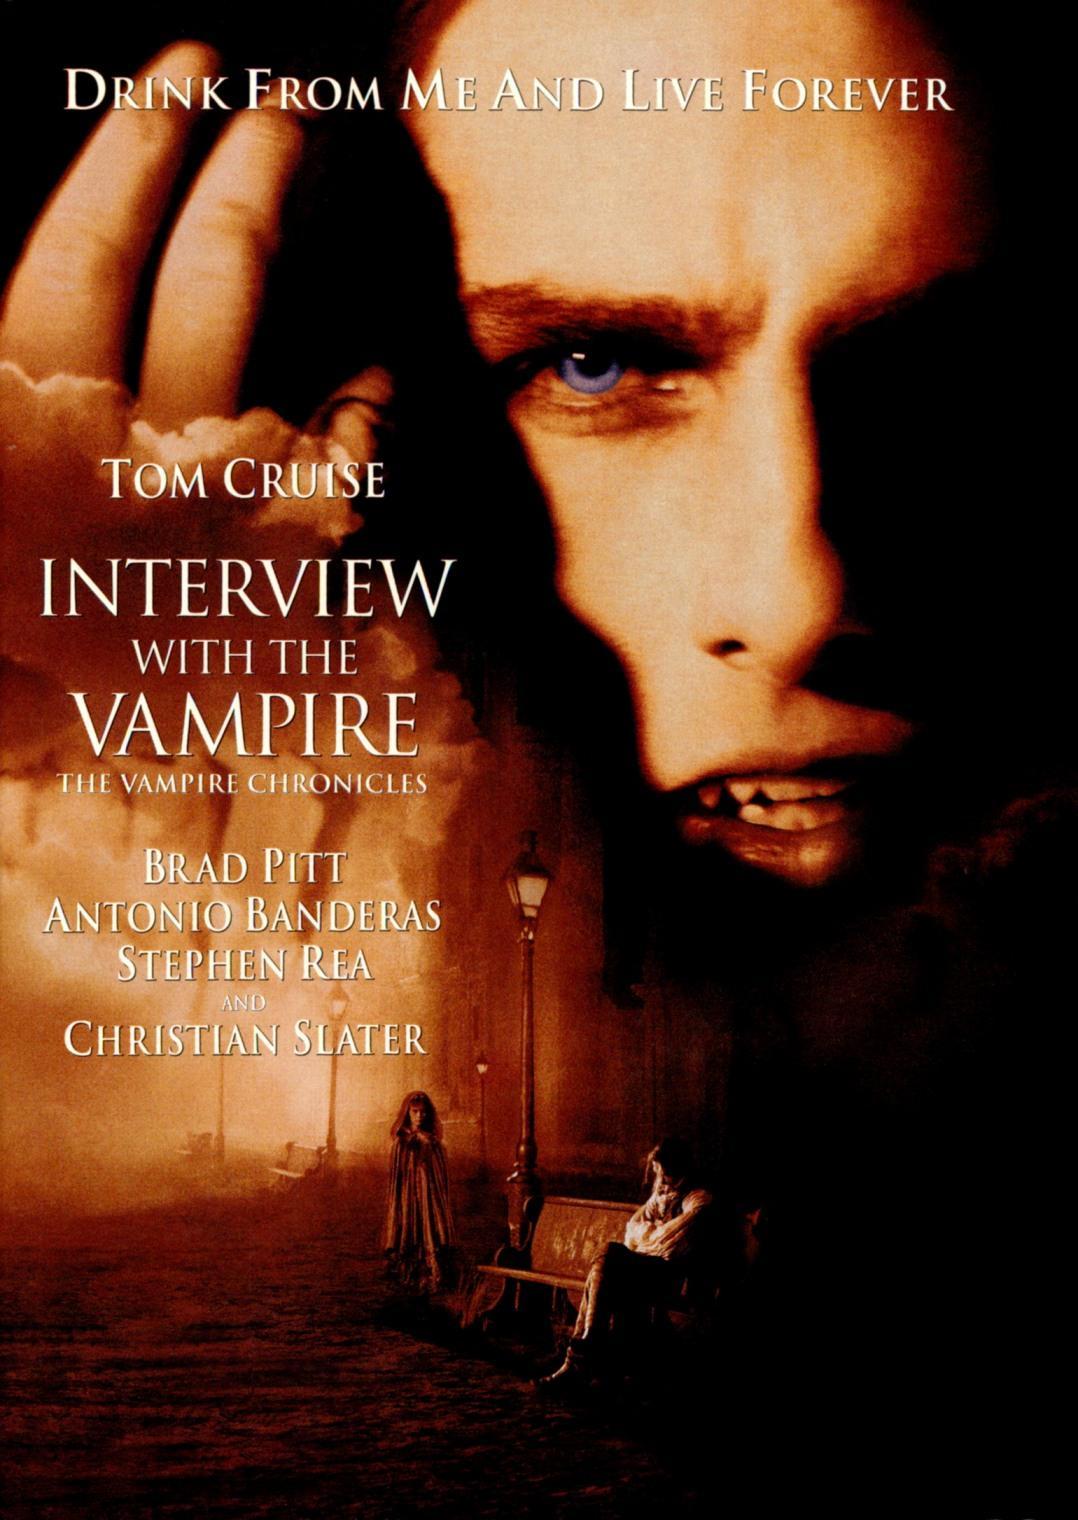 http://4.bp.blogspot.com/_IvO1_GLxYKc/TUqxgJtxbyI/AAAAAAAAC70/EcX3UoHTdzc/s1600/interview+with+the+vampire+poster.jpg